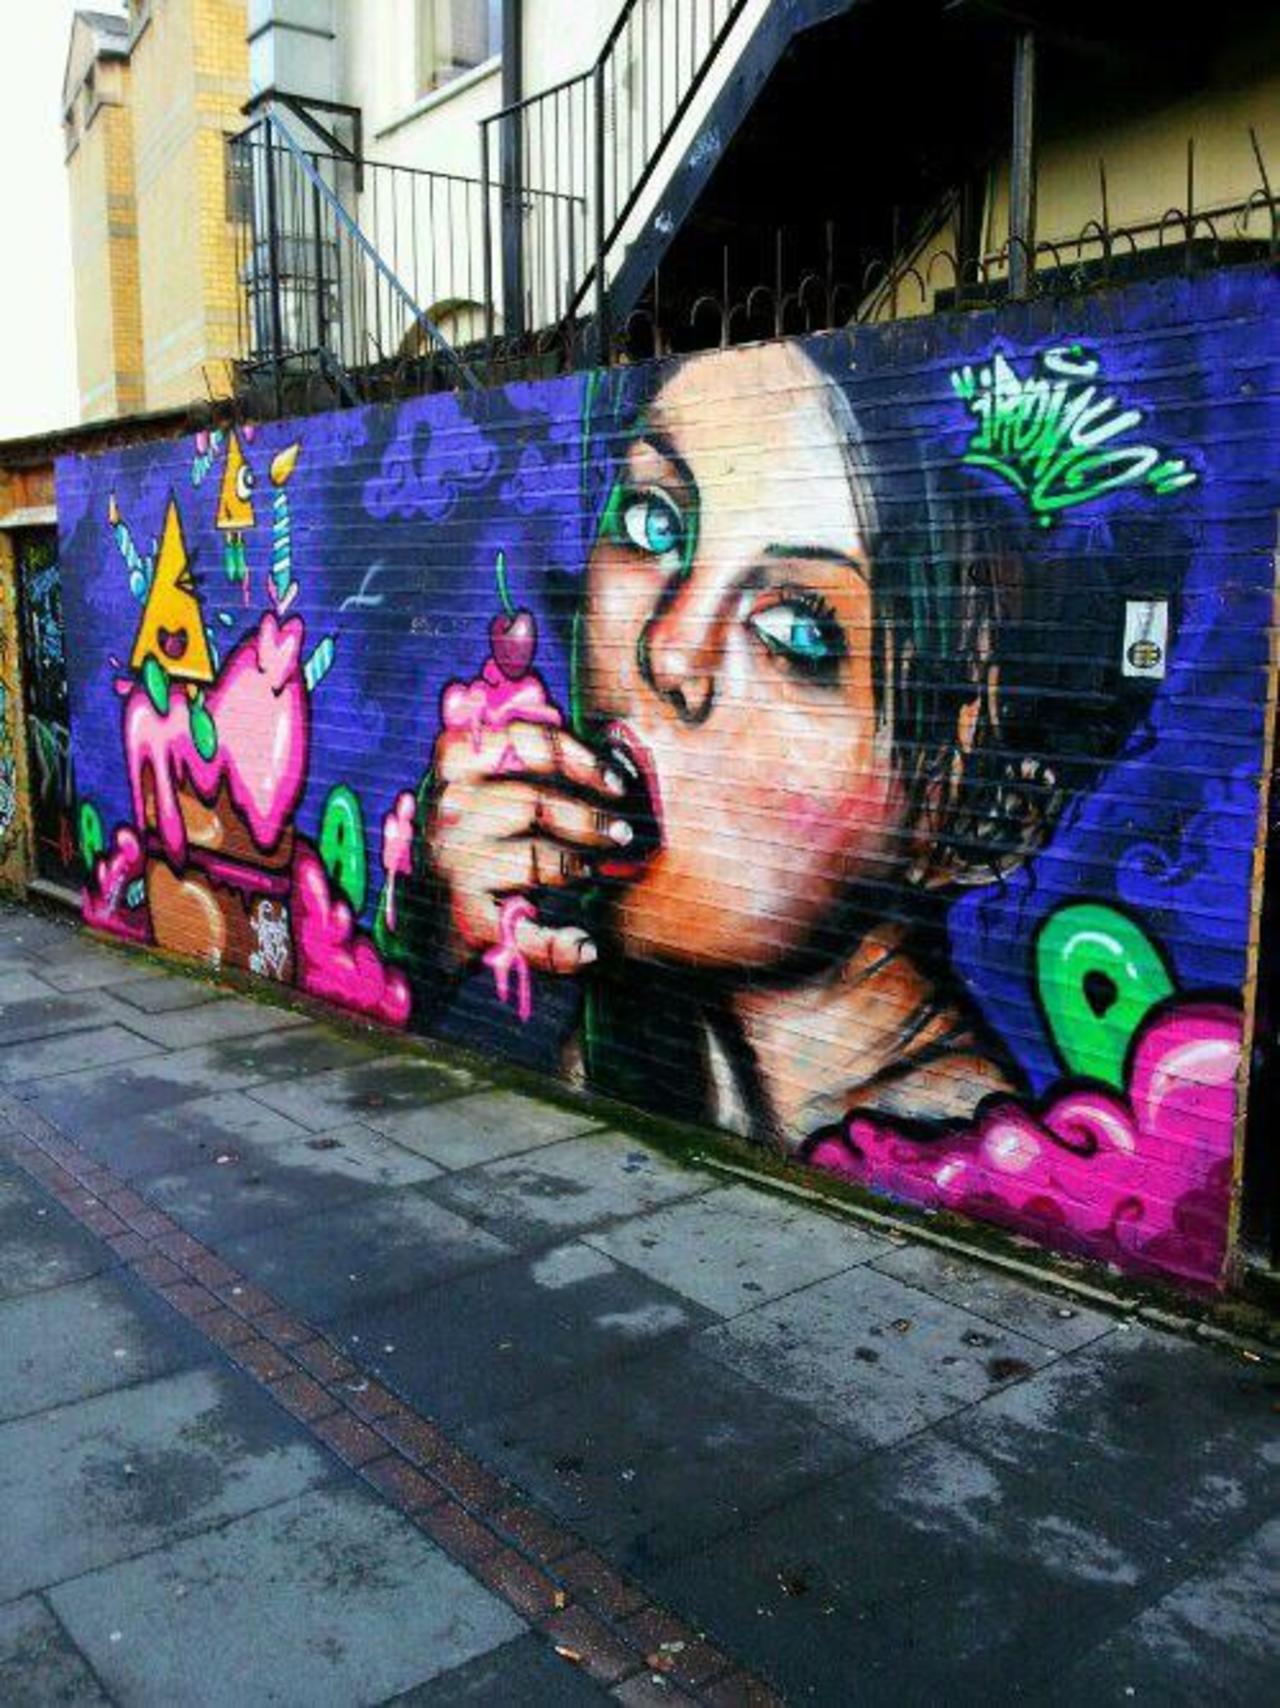 “@Pitchuskita: Artista & Irony 
Pedley Street

#streetart #art #graffiti #mural http://t.co/C3r63sVuCR”